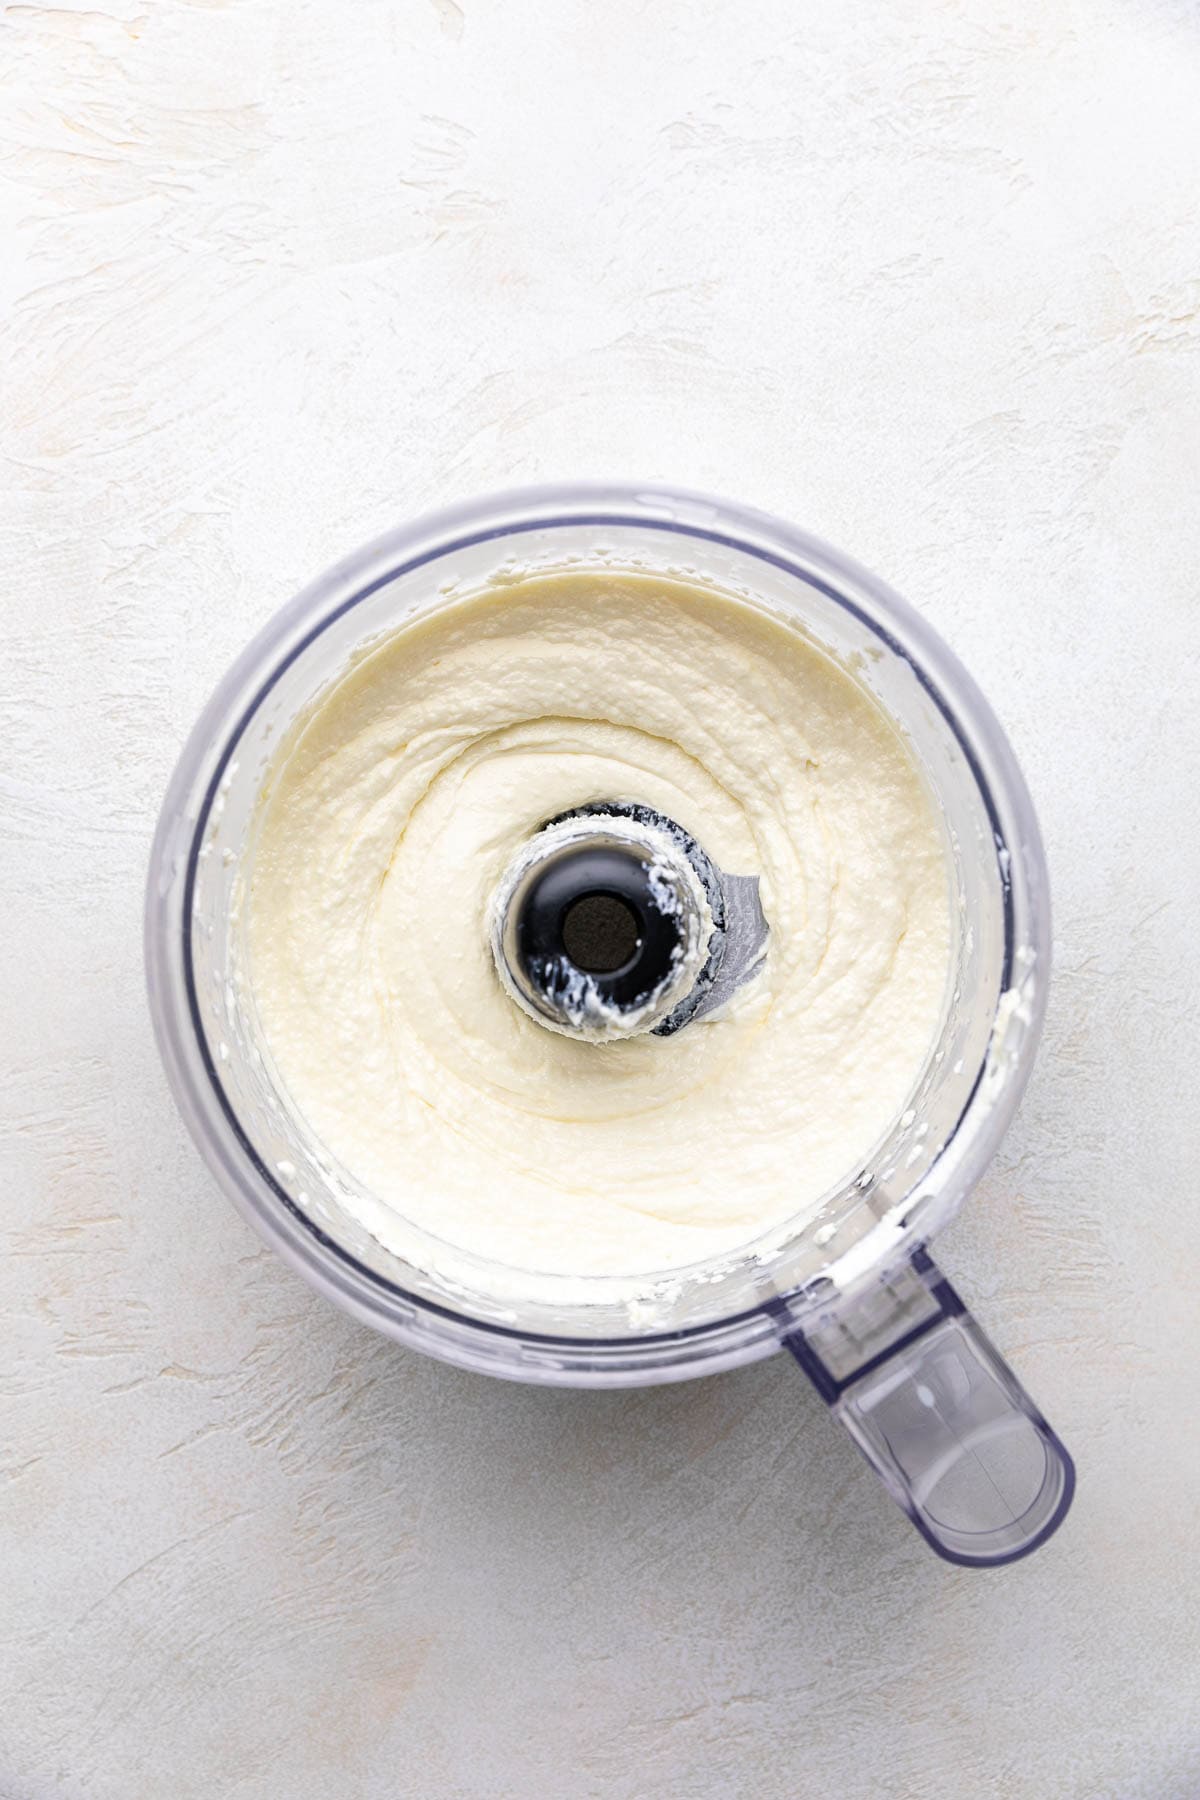 Feta cream cheese dip in a food processor.